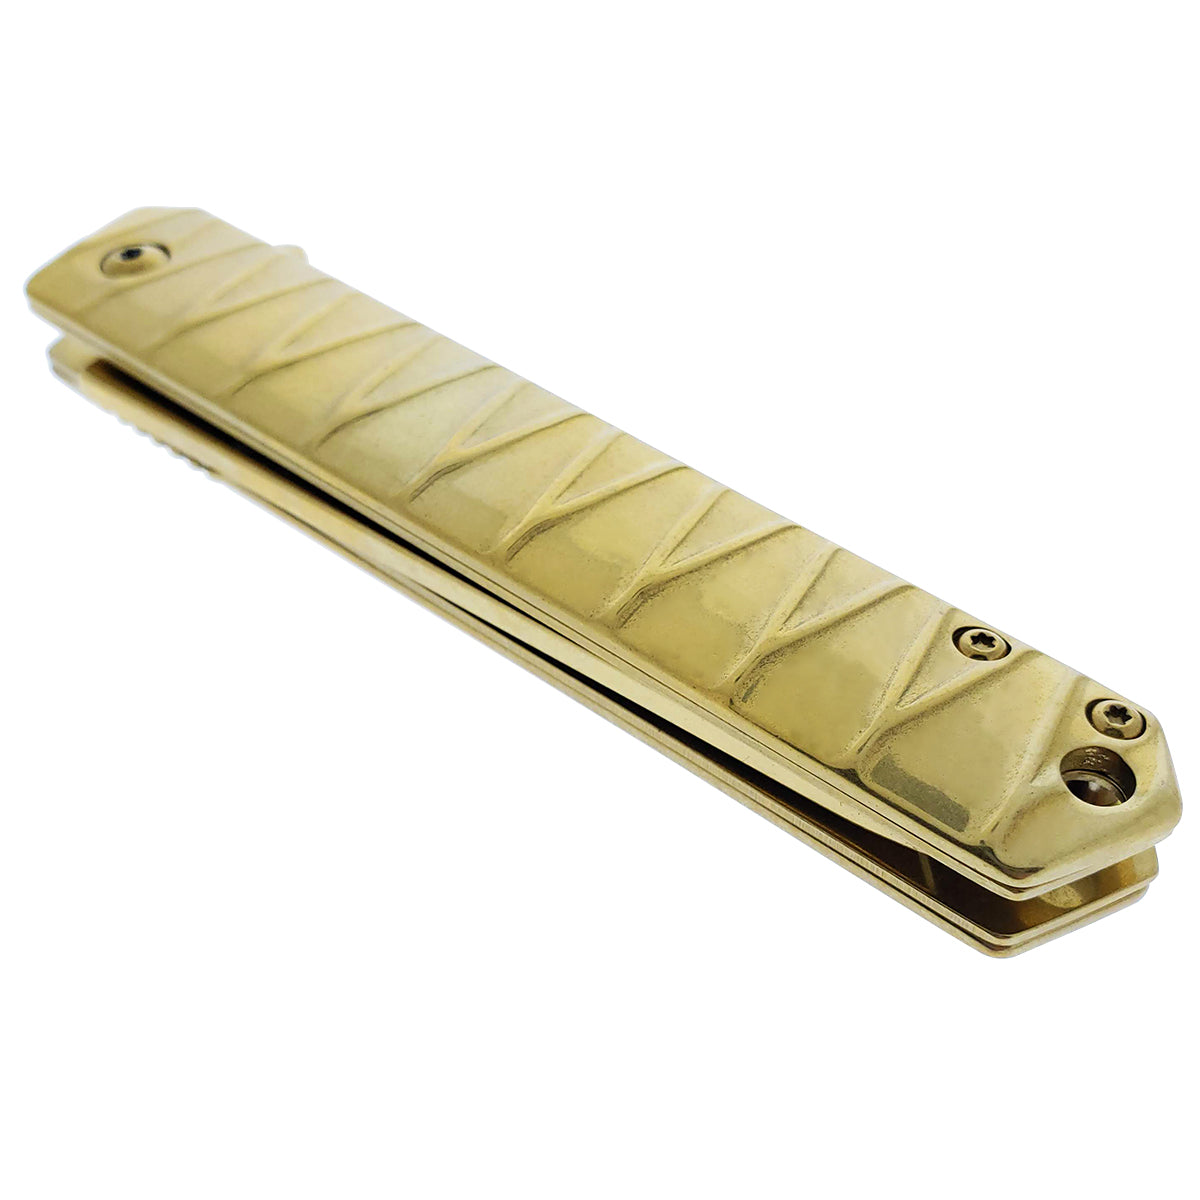 Wholesale Tanto Knife Shop Online: Falcon Gold Tanto Pocket Knife.